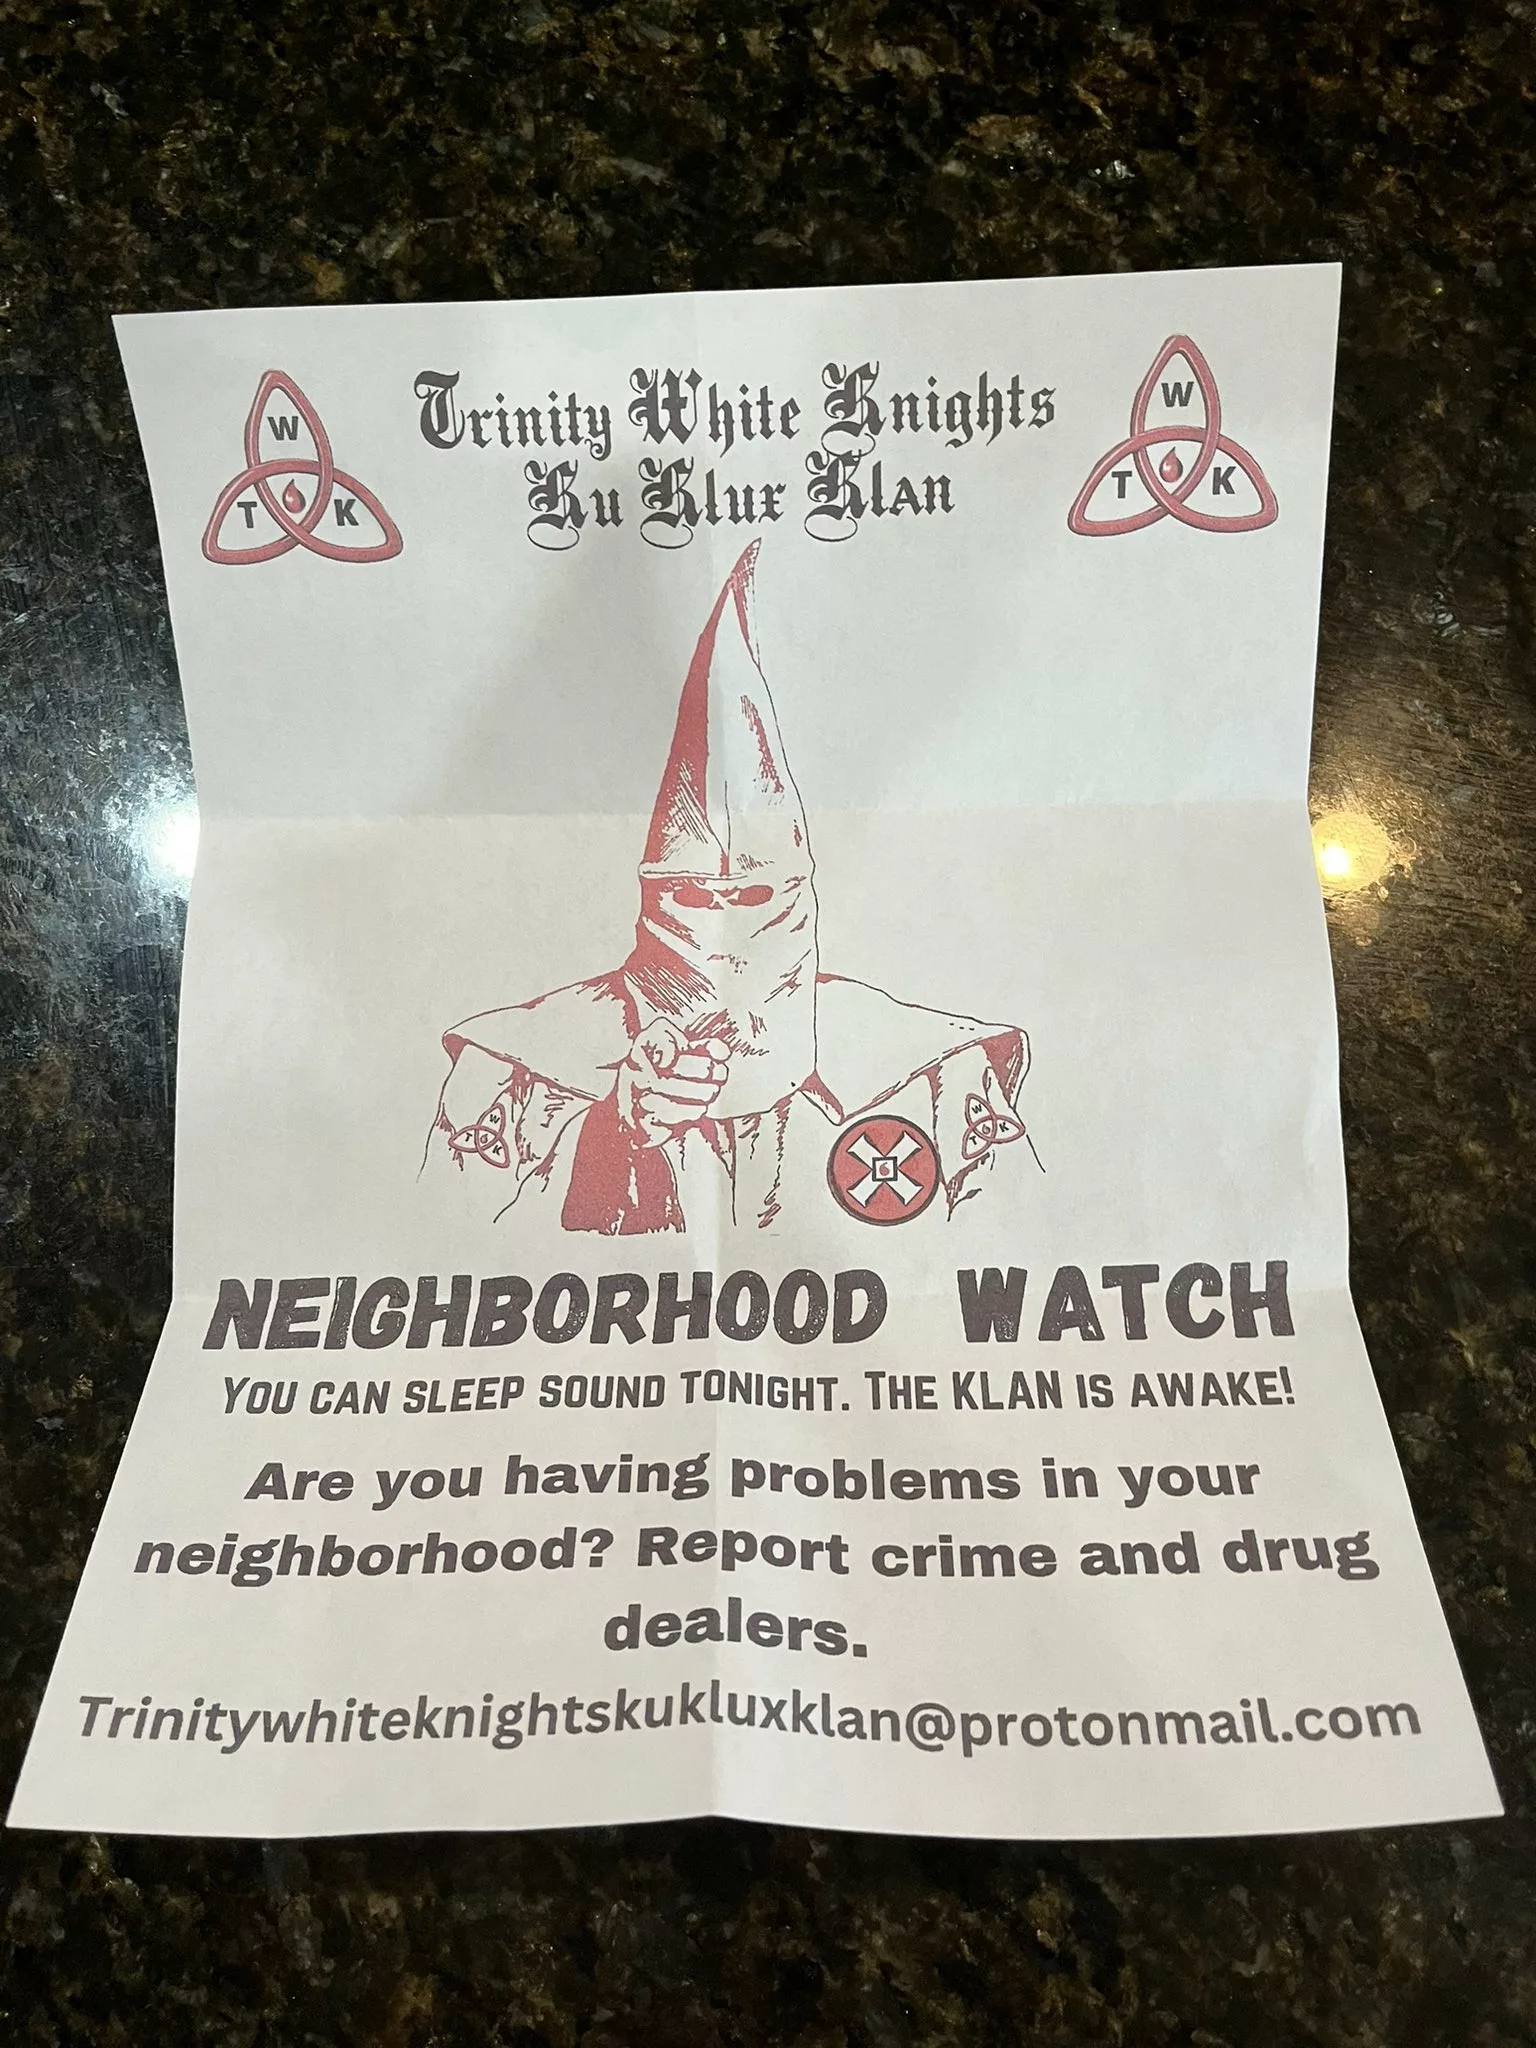 Mt. Sterling police investigating KKK flyers found in neighborhoods